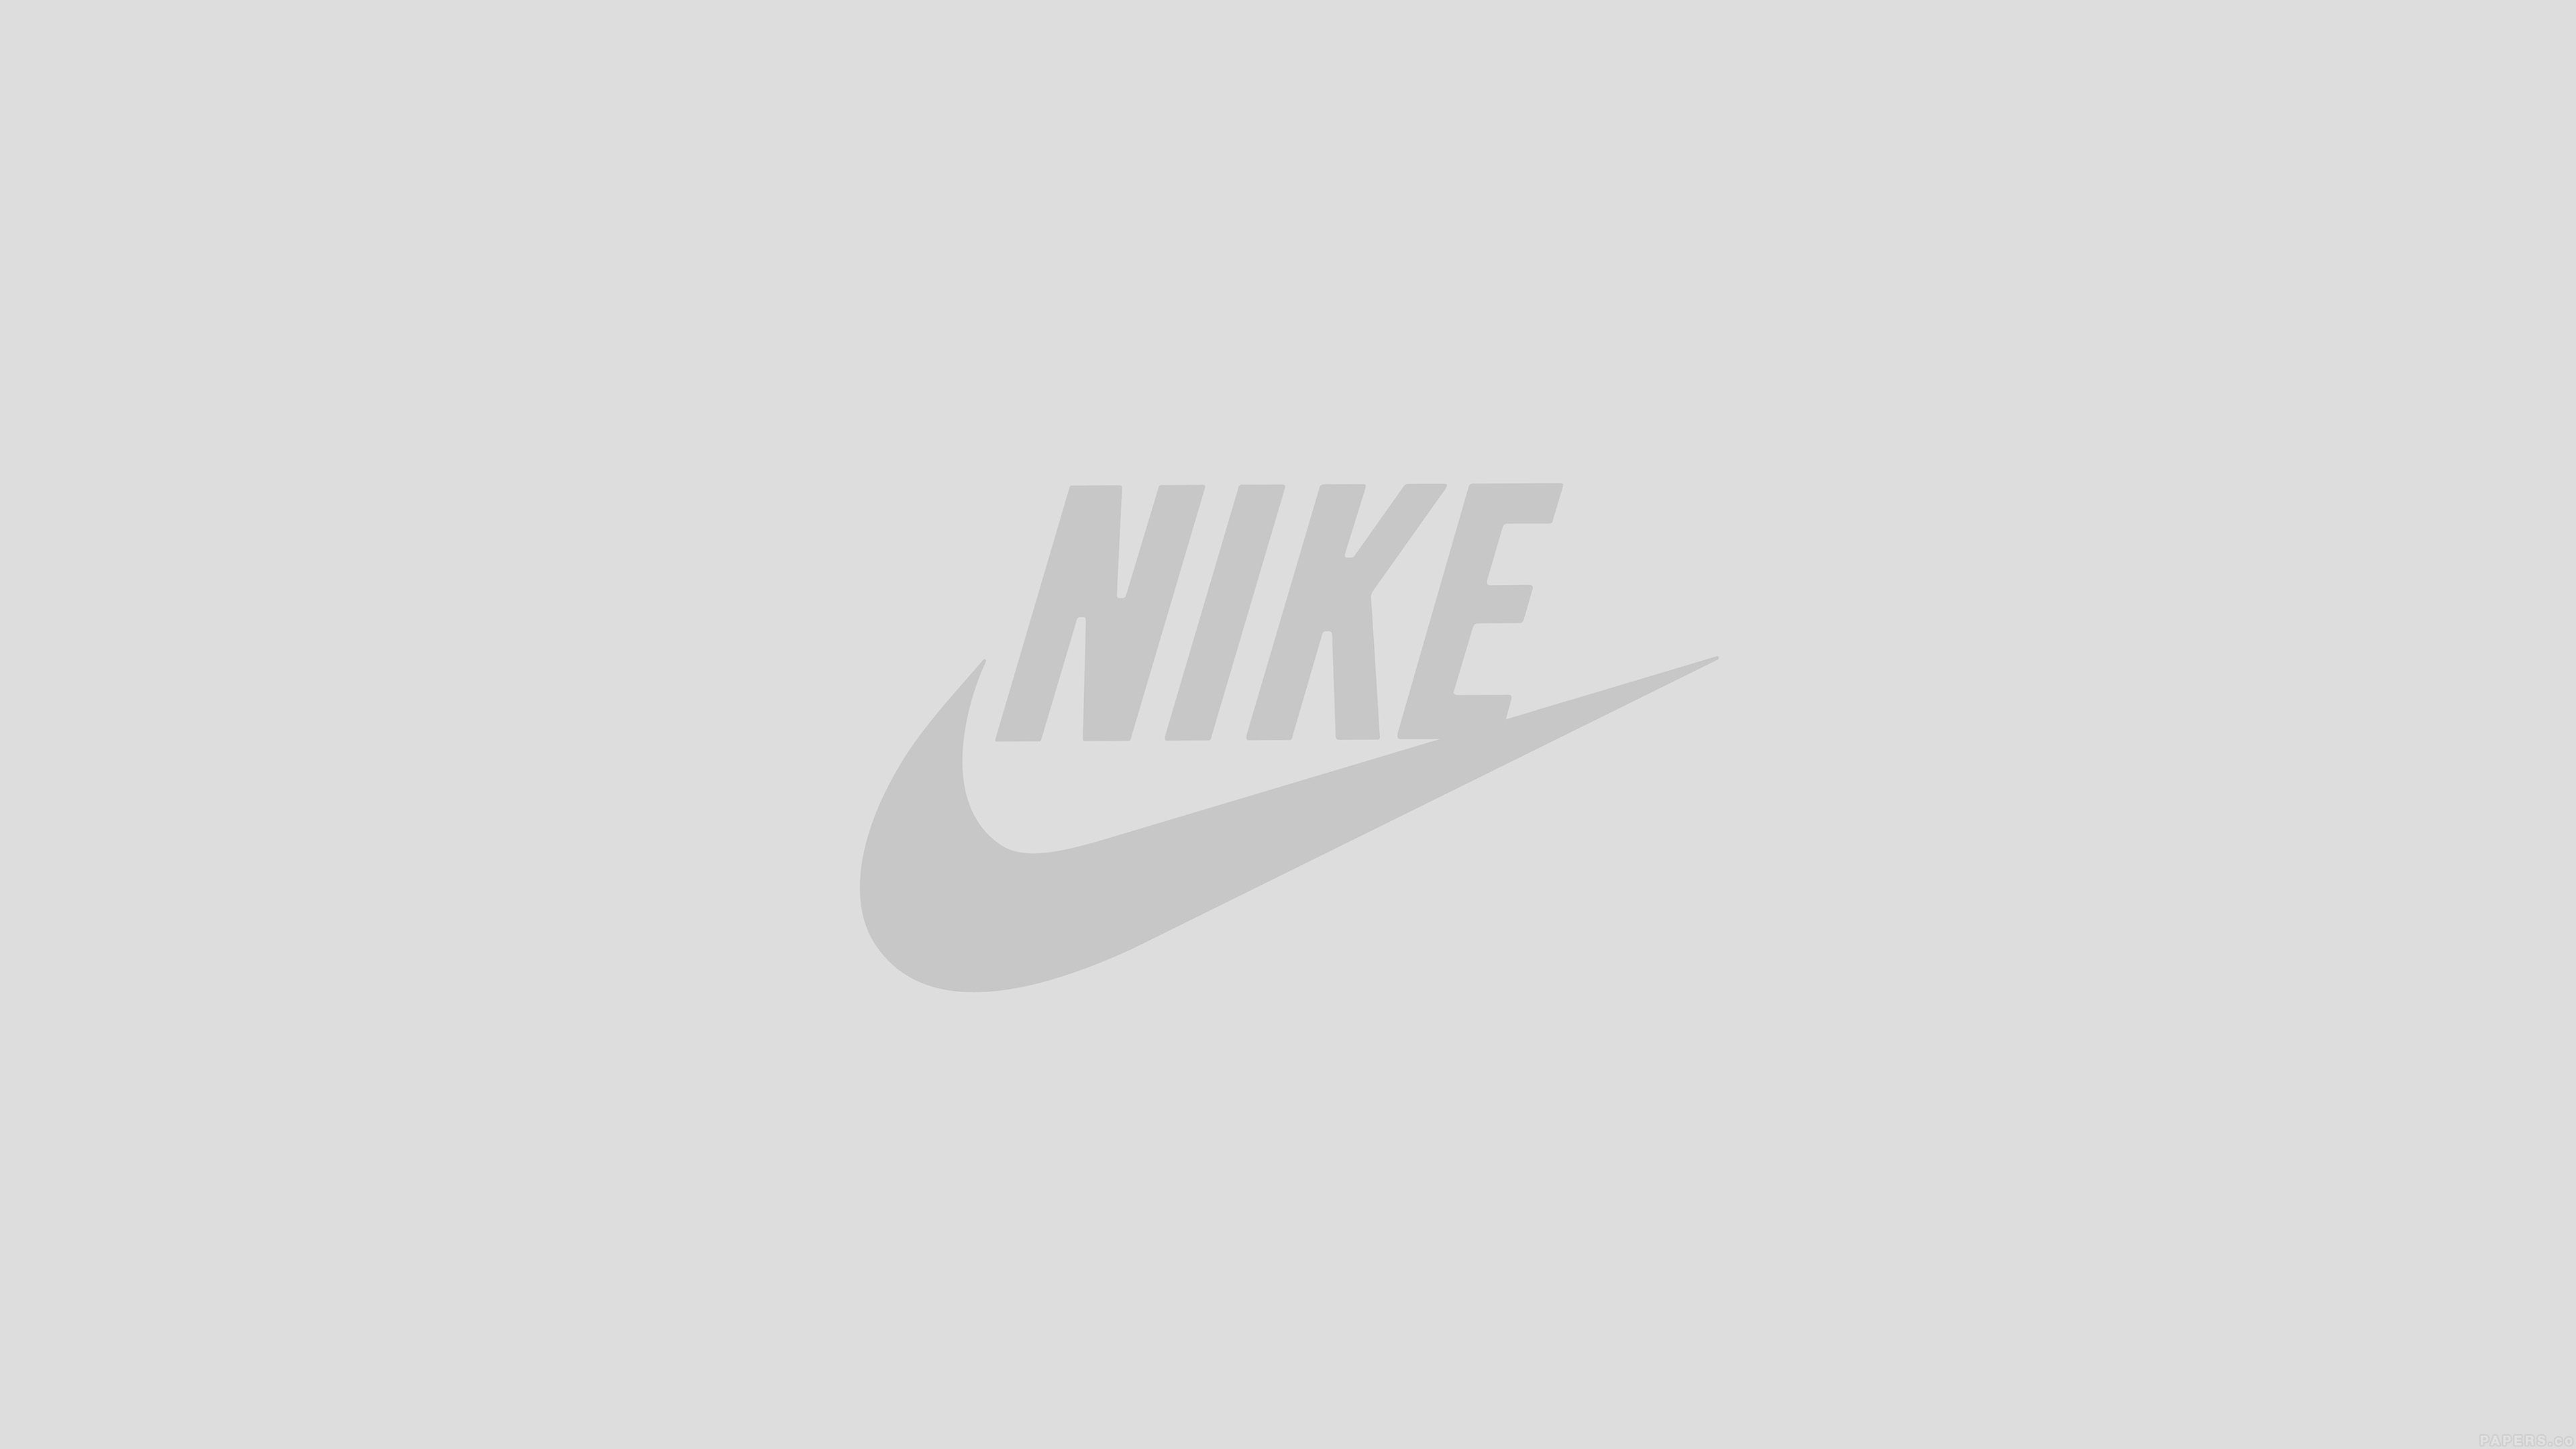 Nike Logo Sports Art Minimal Simple White Wallpaper